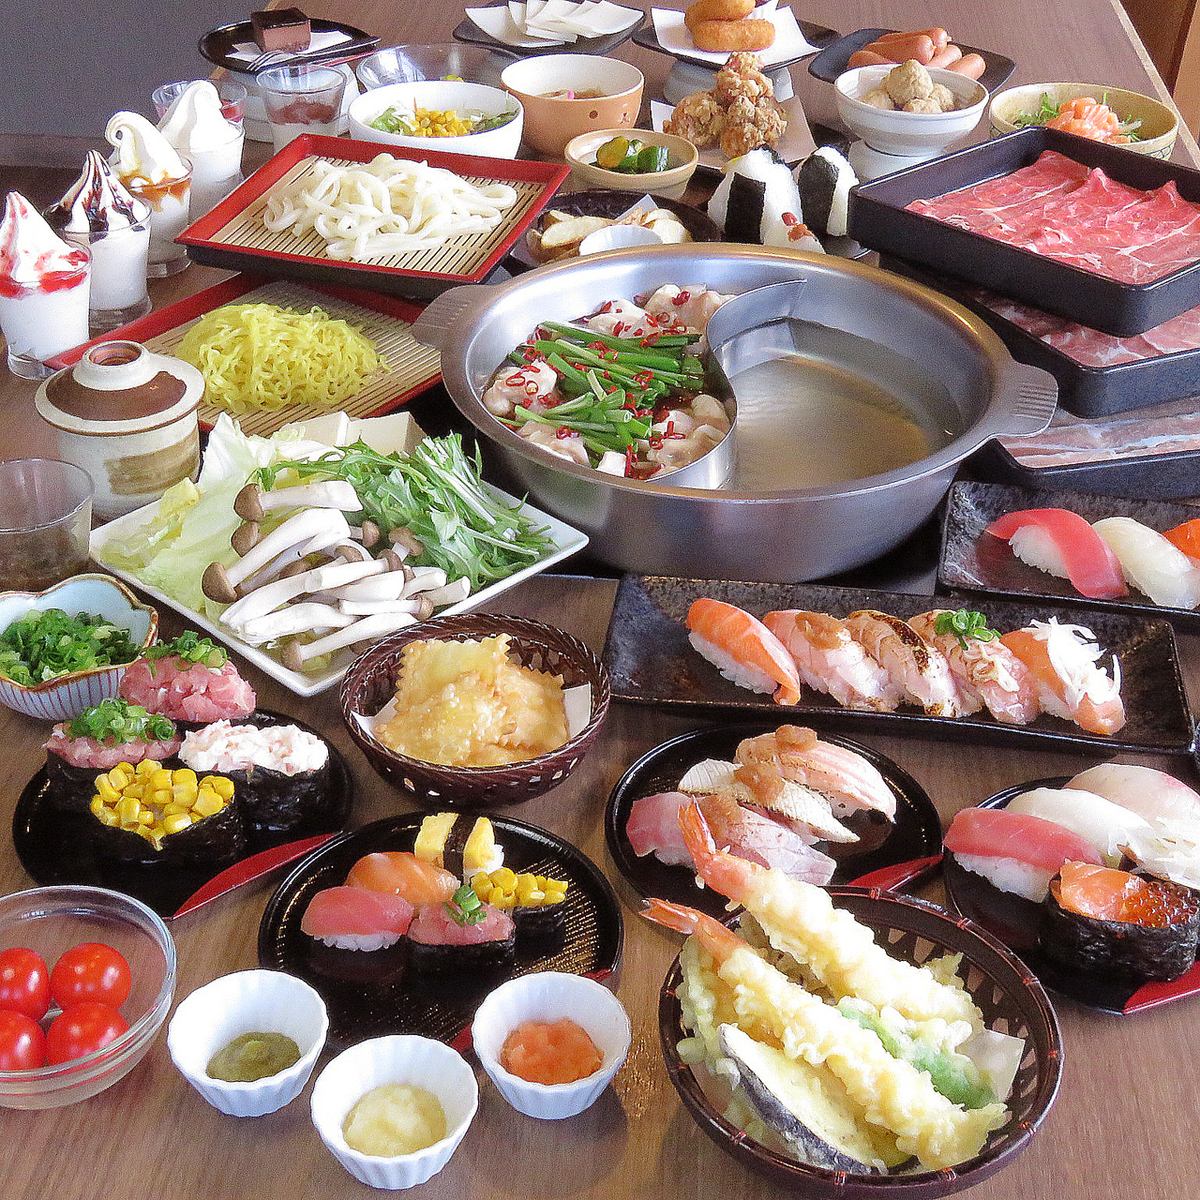 All-you-can-eat fresh sushi and shabu-shabu!